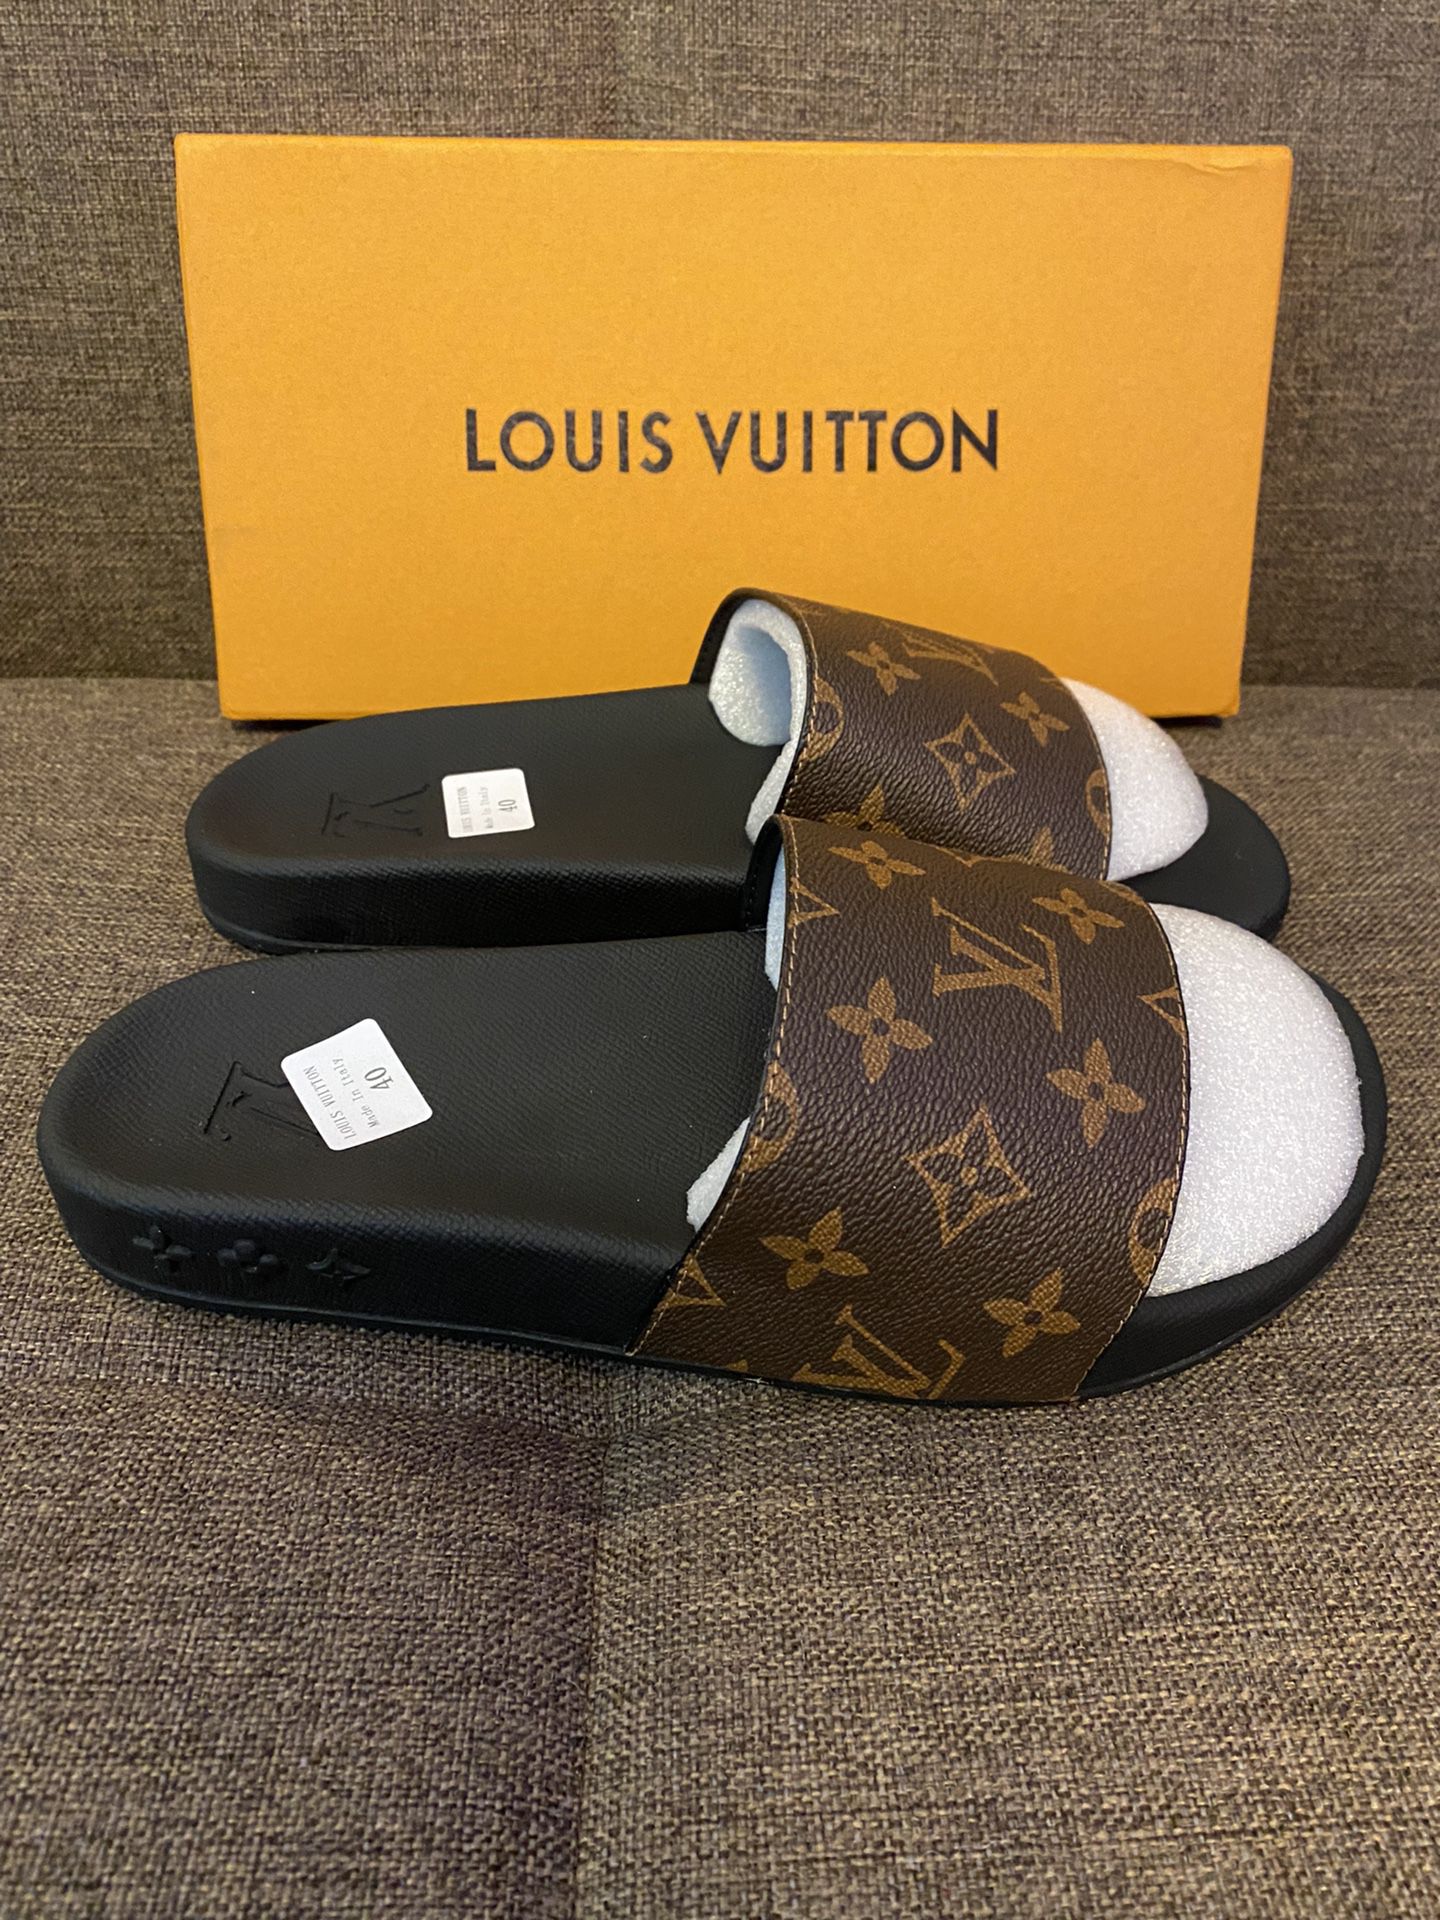 Louis Vuitton Waterfront Mule Macassar. Size 09.0